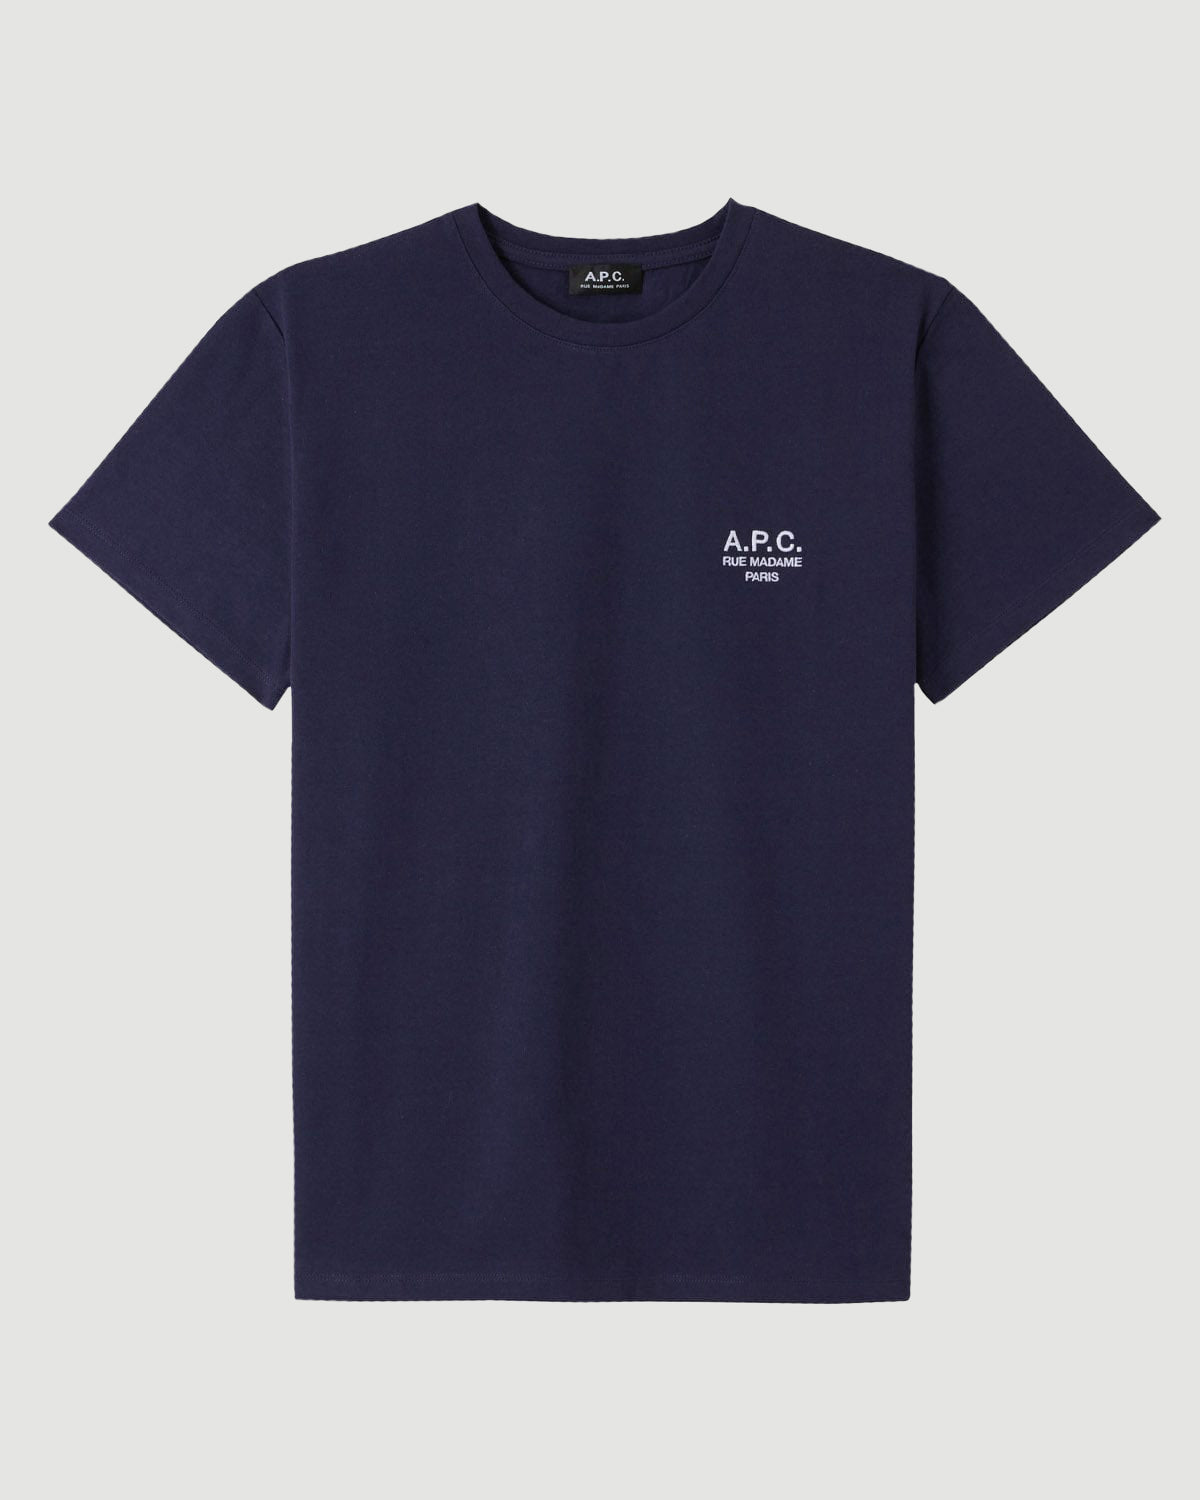 A.P.C. Raymond T-Shirt Dark Navy T-shirt S/S Men